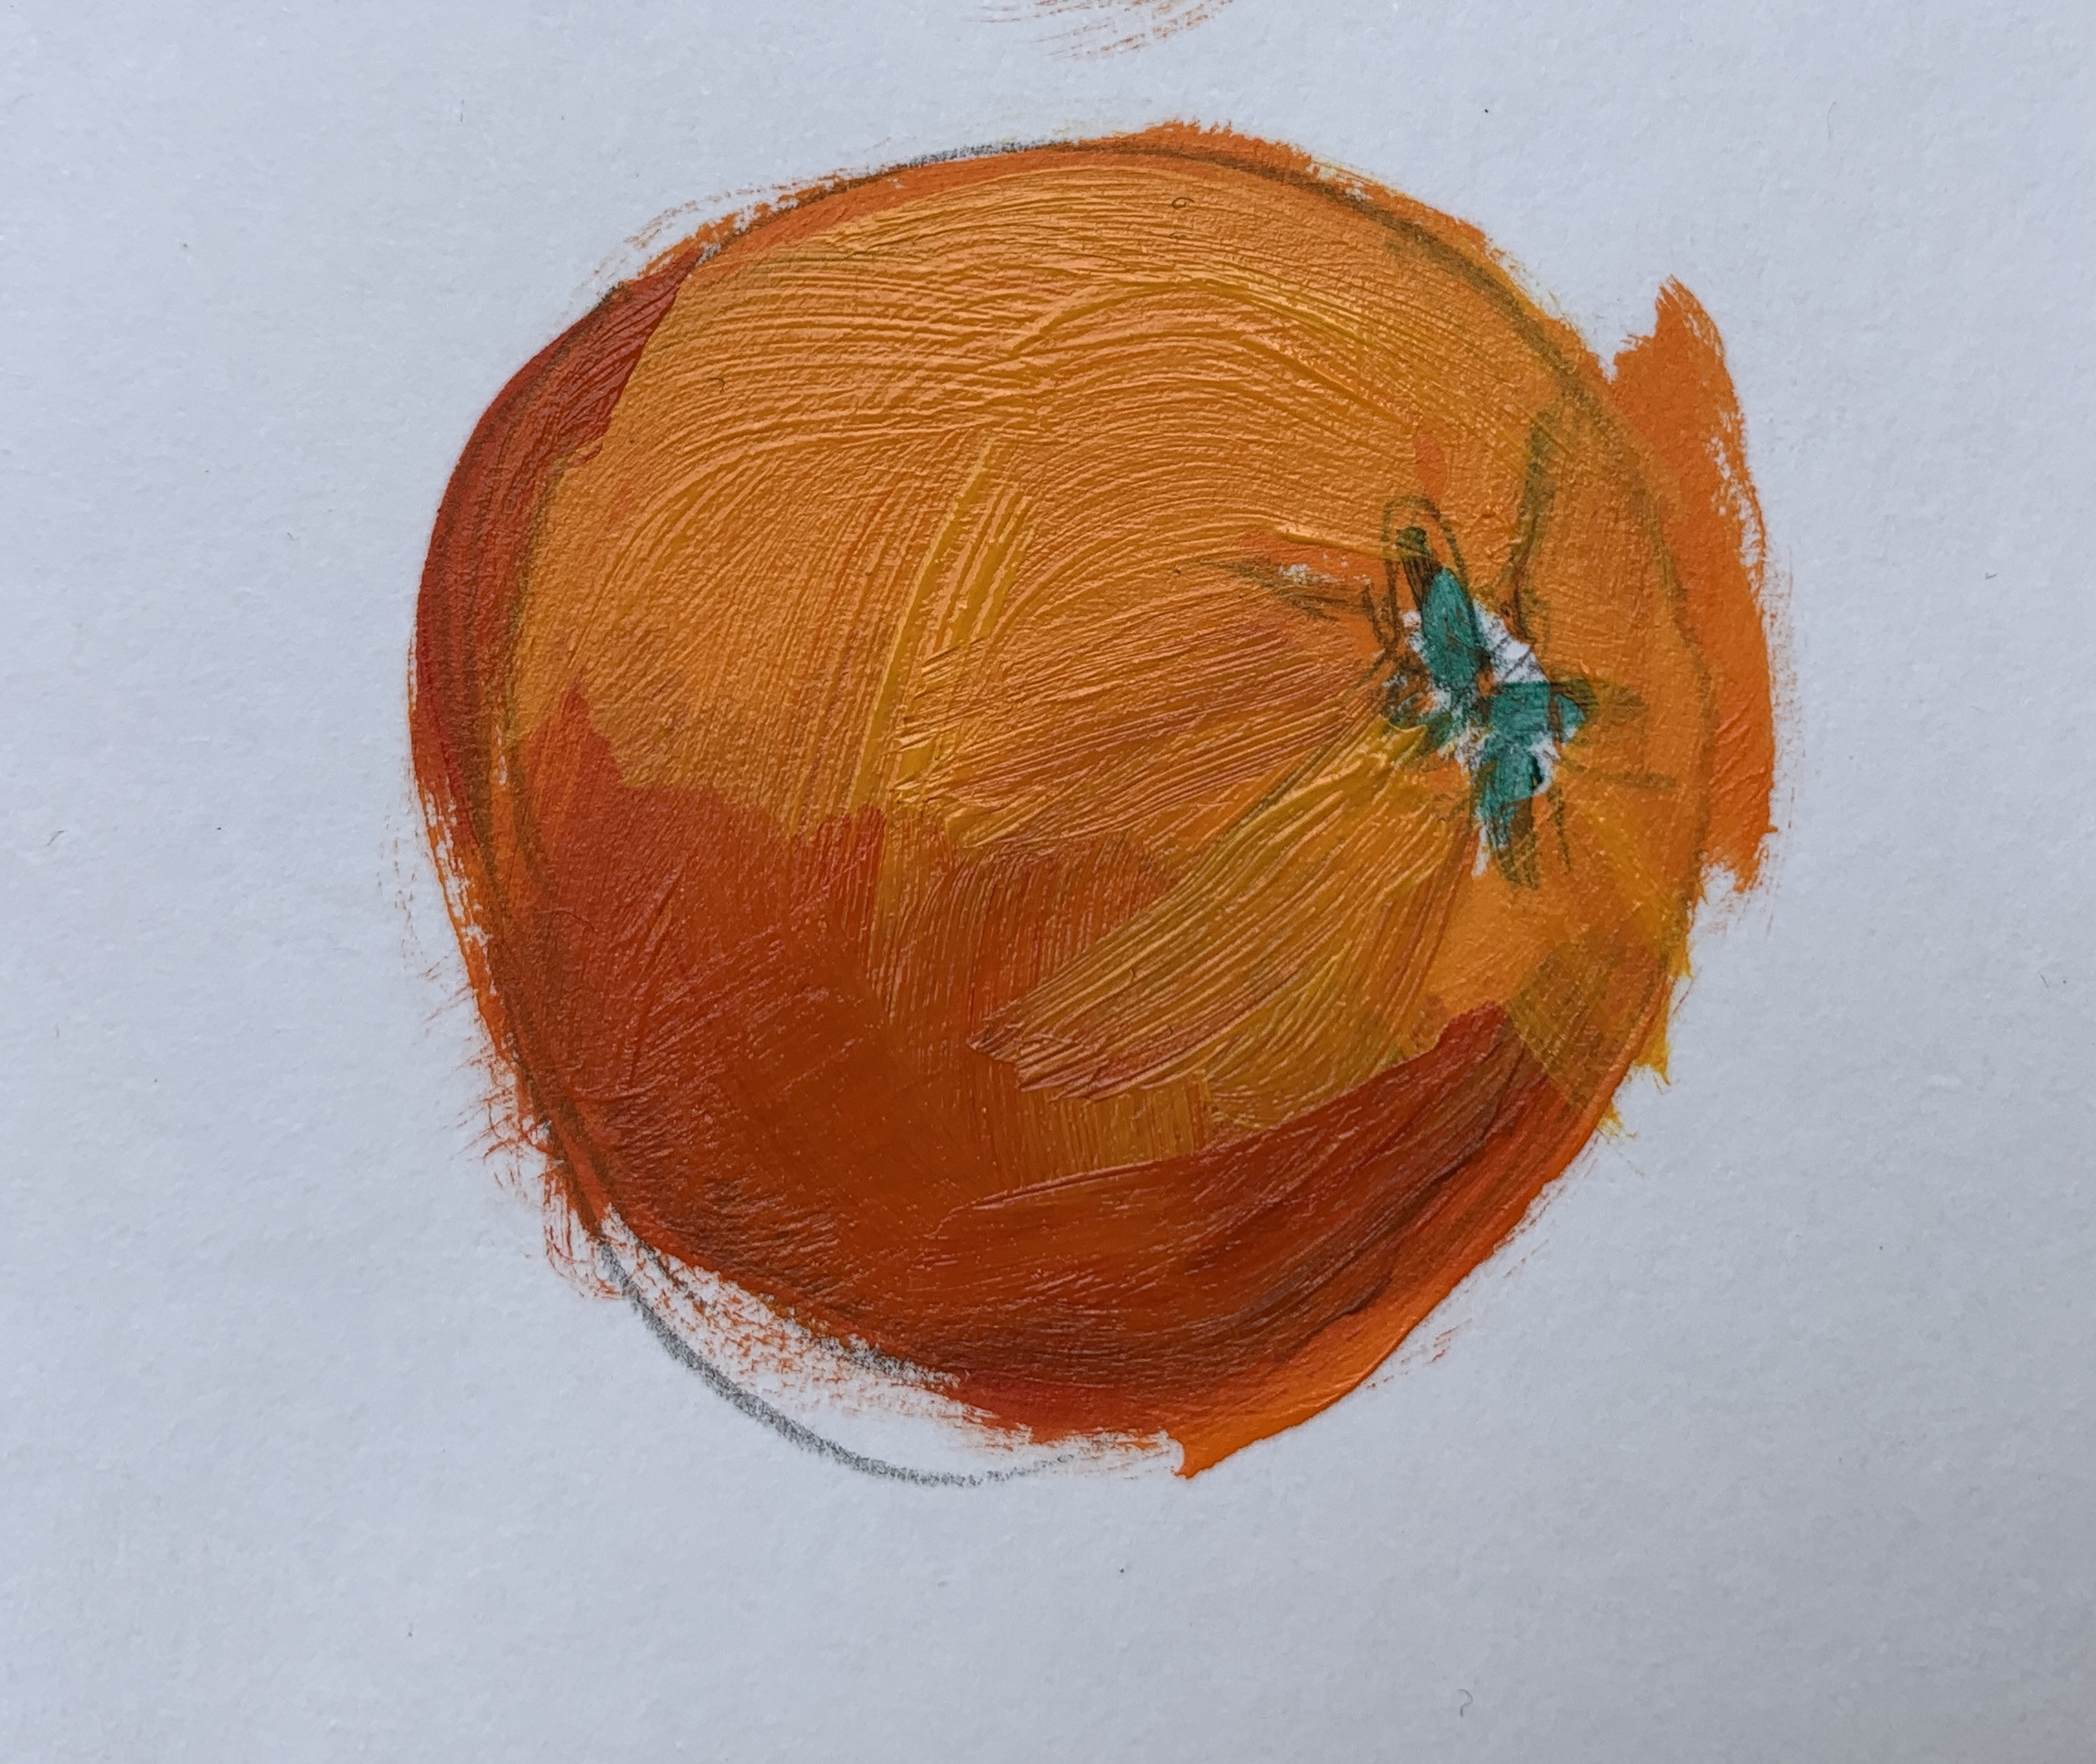 Orange with lighter orange painted on top